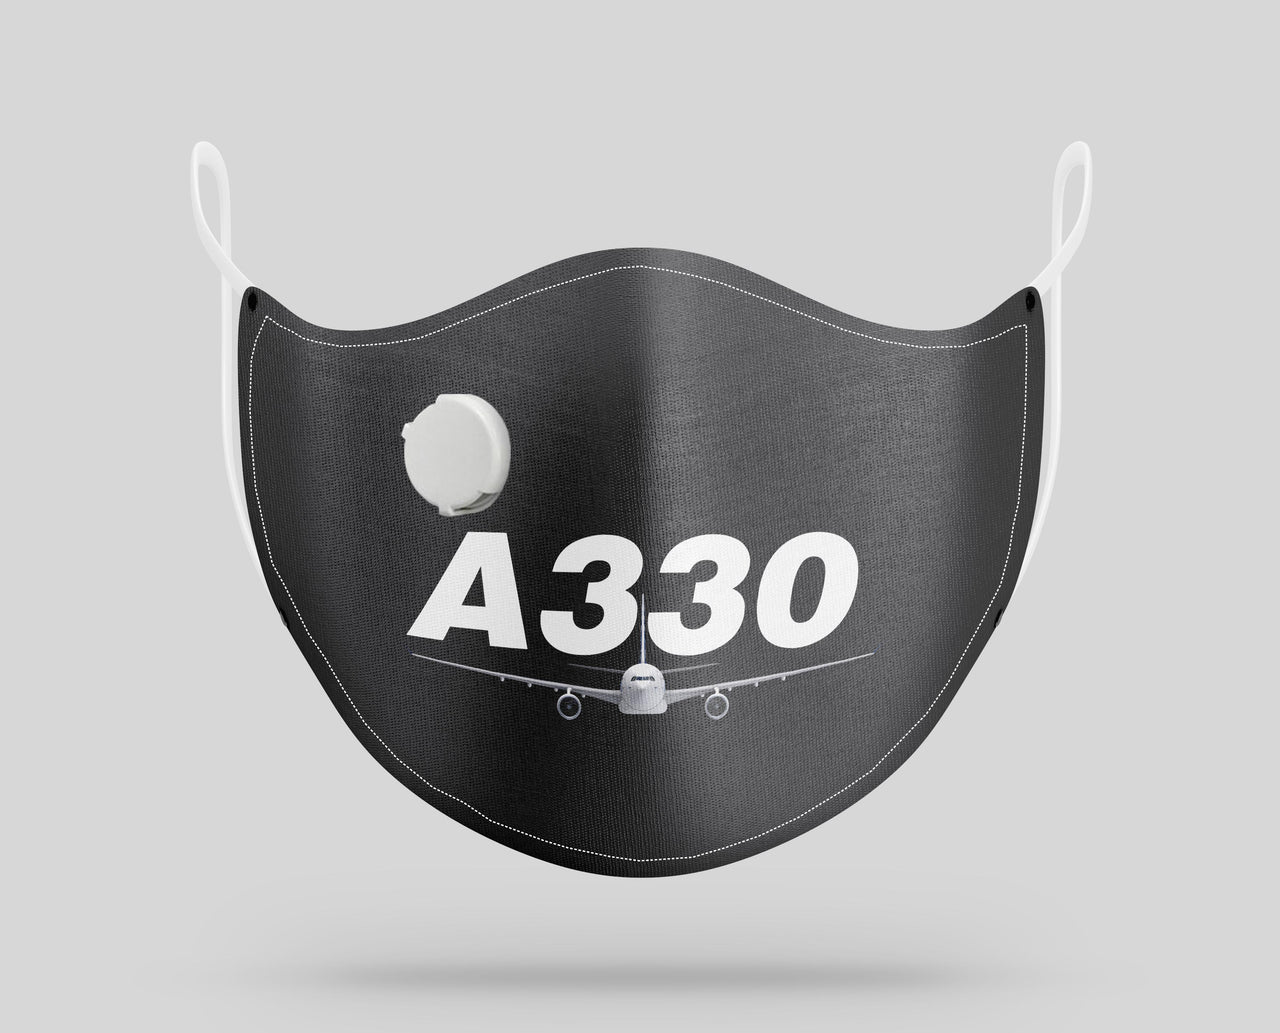 Super Airbus A330 Designed Face Masks